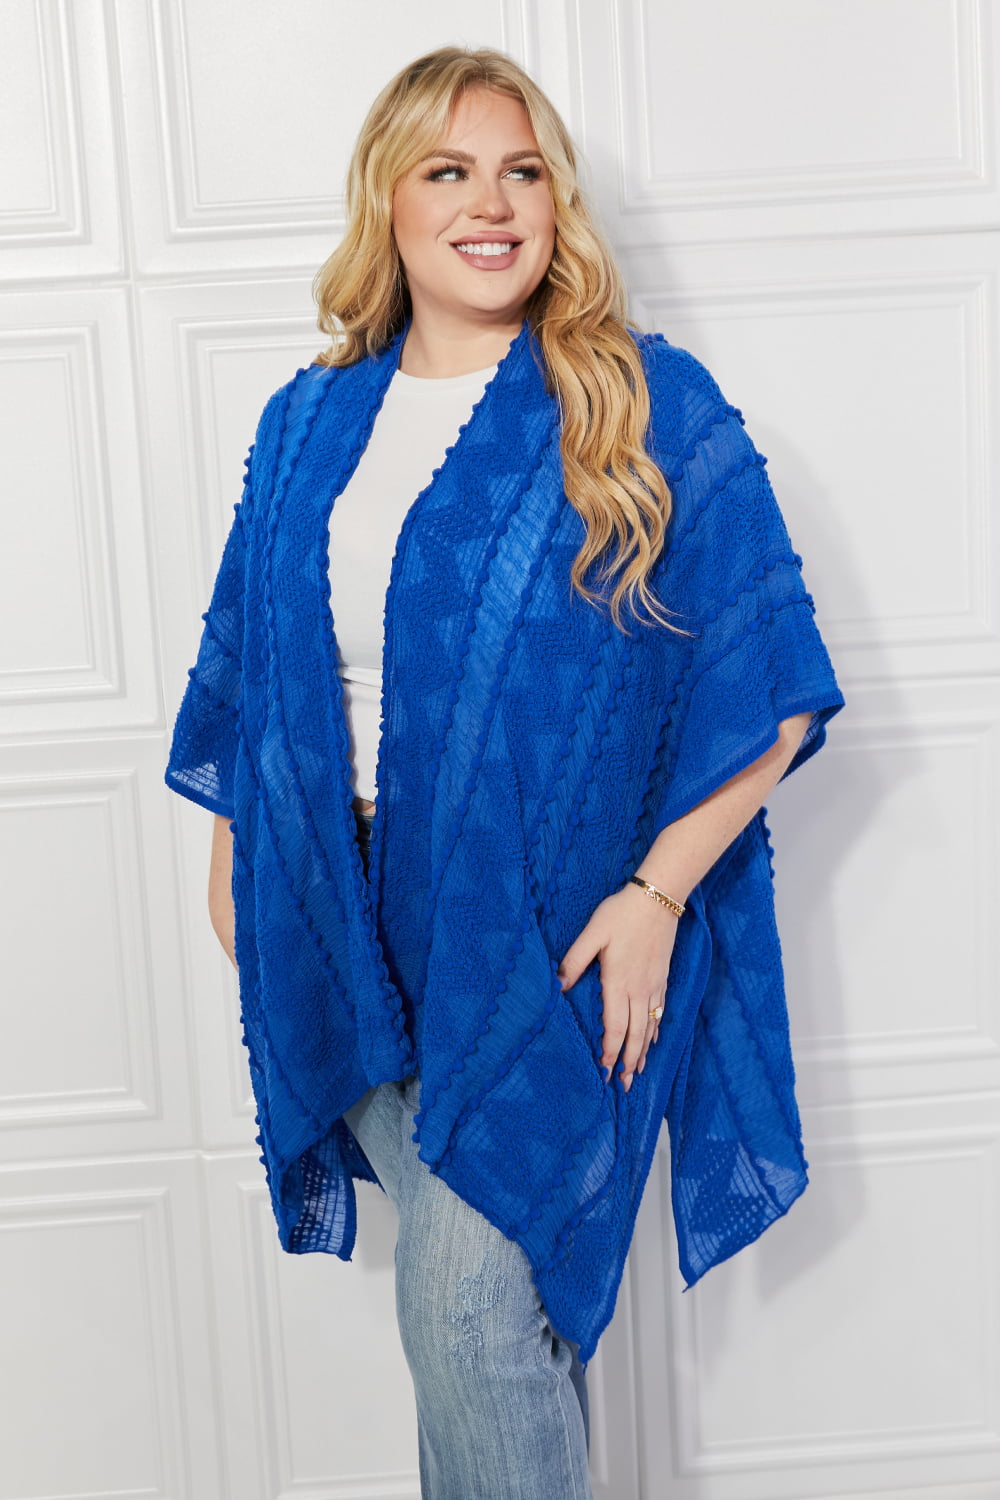 Pom-Pom Asymmetrical Poncho Cardigan in Blue - Blue / One Size - Women’s Clothing & Accessories - Outerwear - 8 - 2024